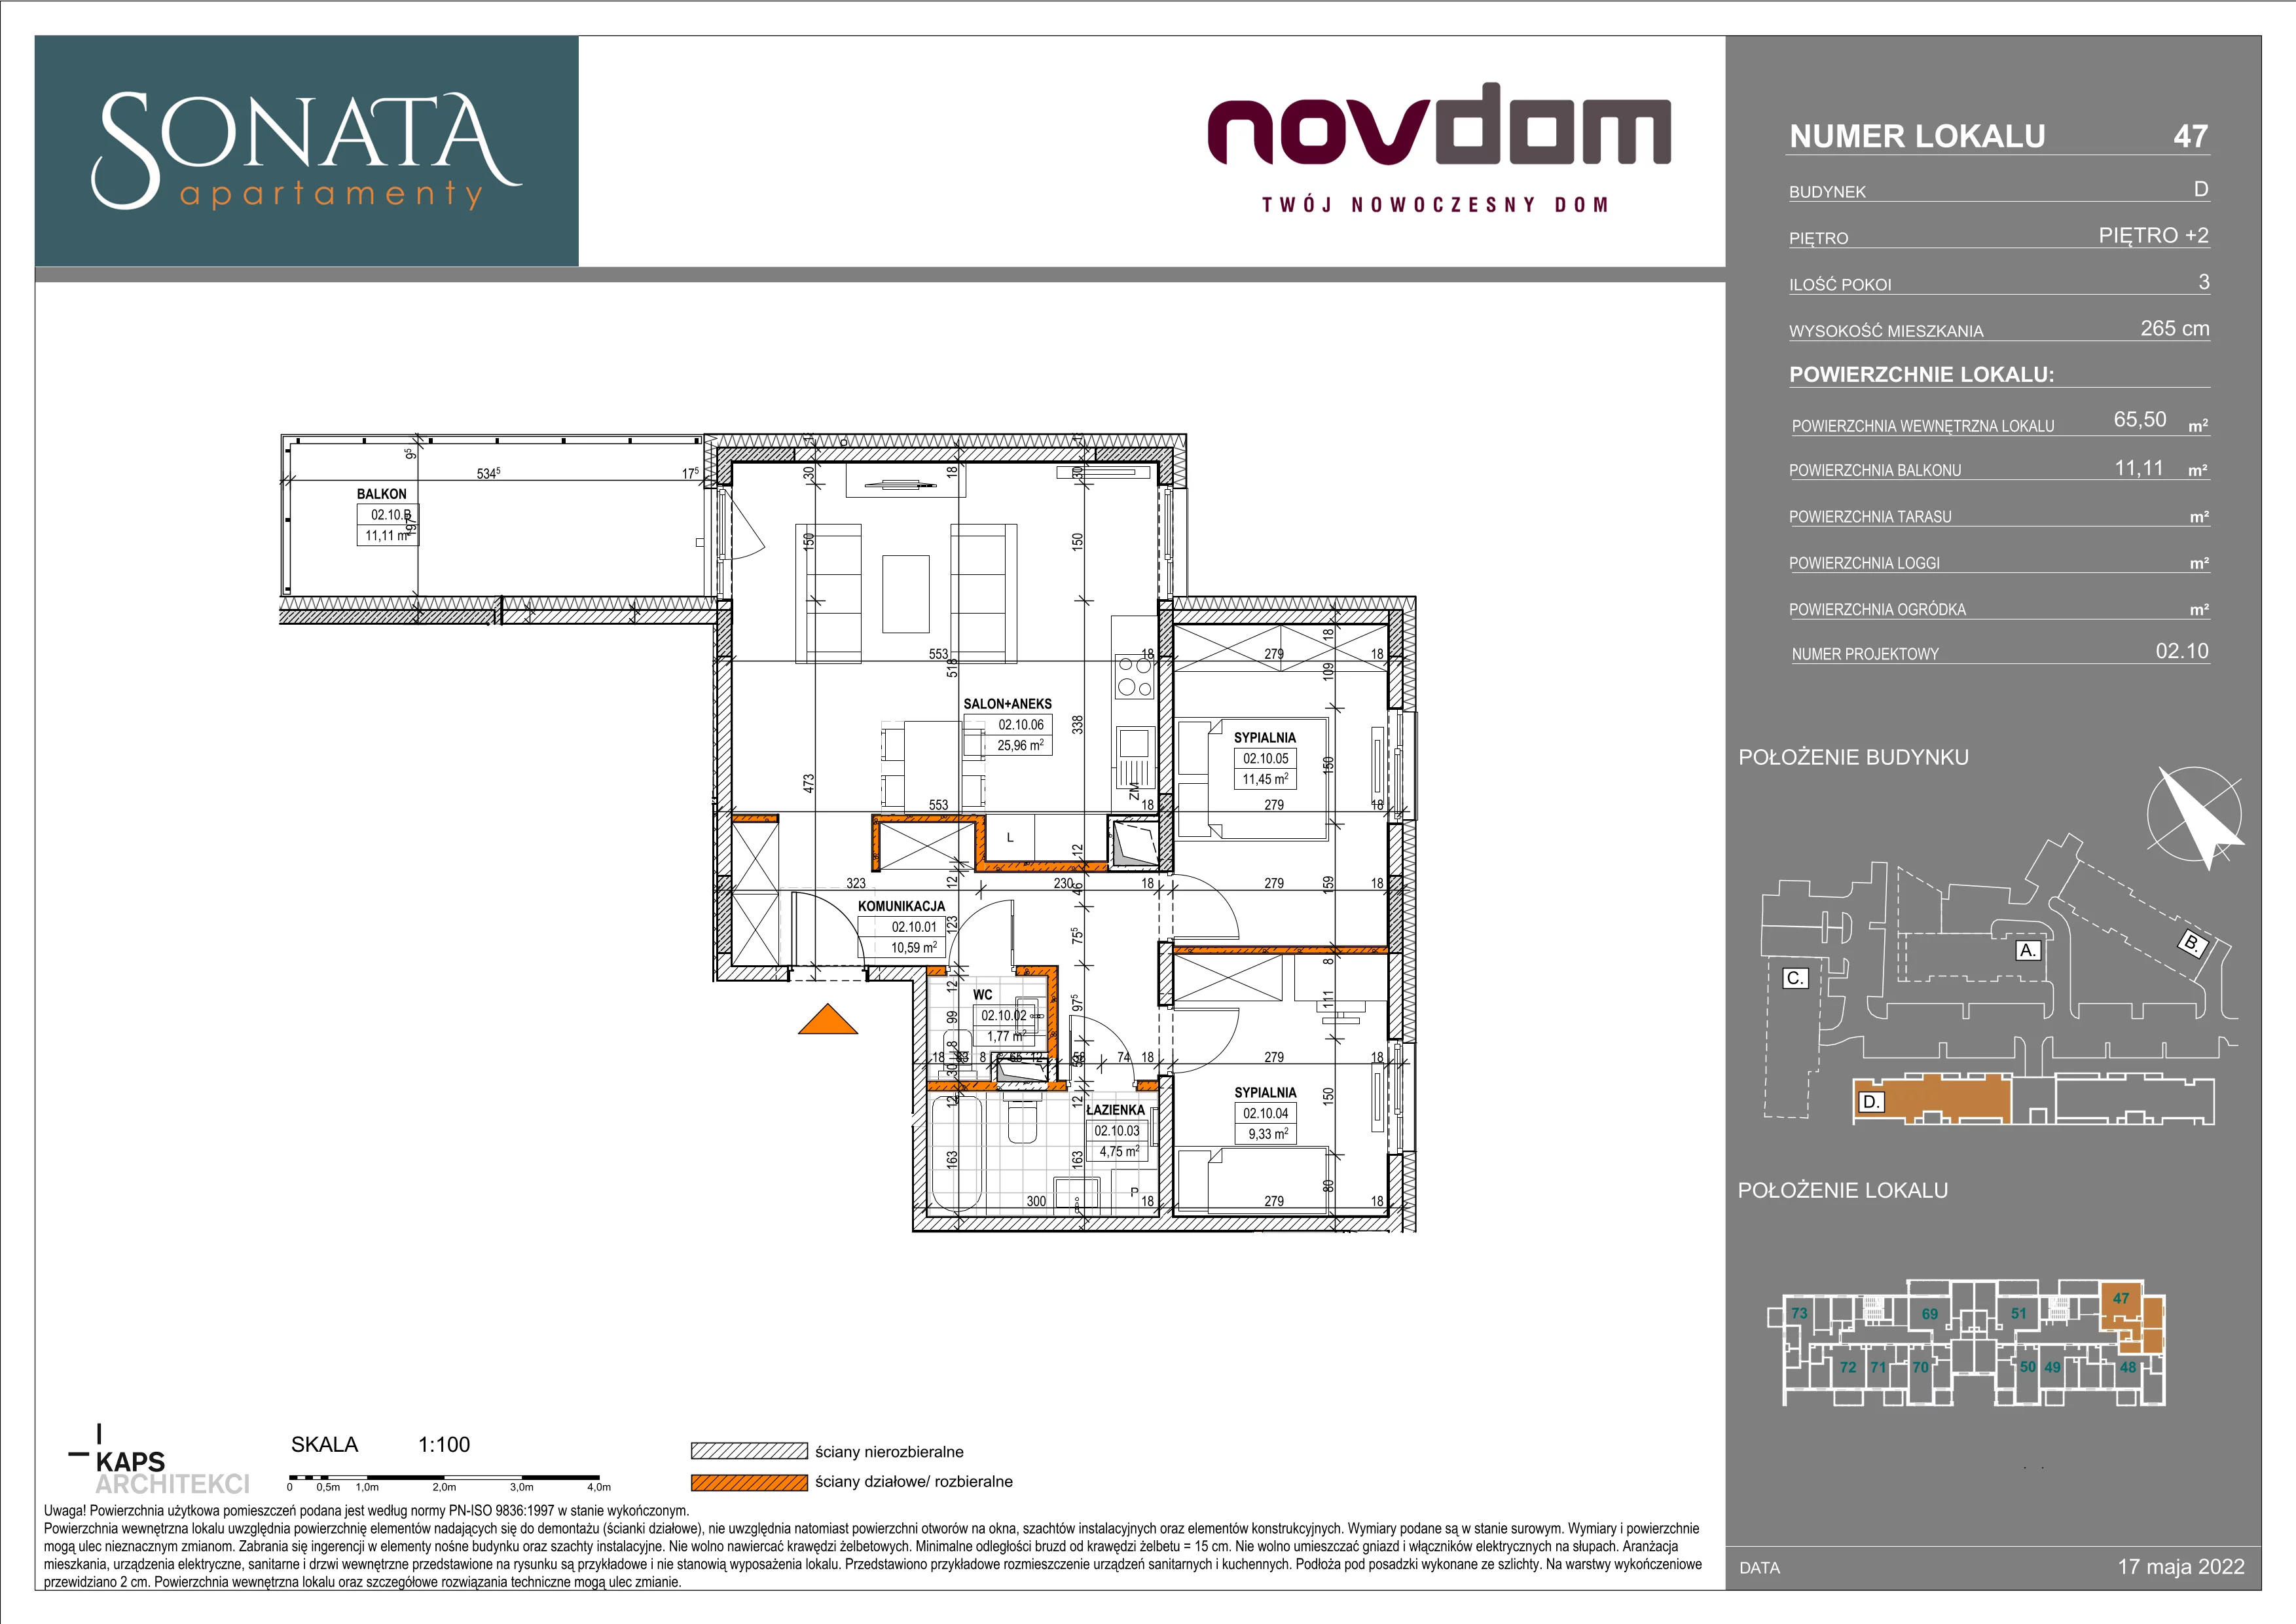 Apartament 65,50 m², piętro 2, oferta nr D/47, Apartamenty Sonata II, Szczytno, ul. Królowej Jadwigi 6